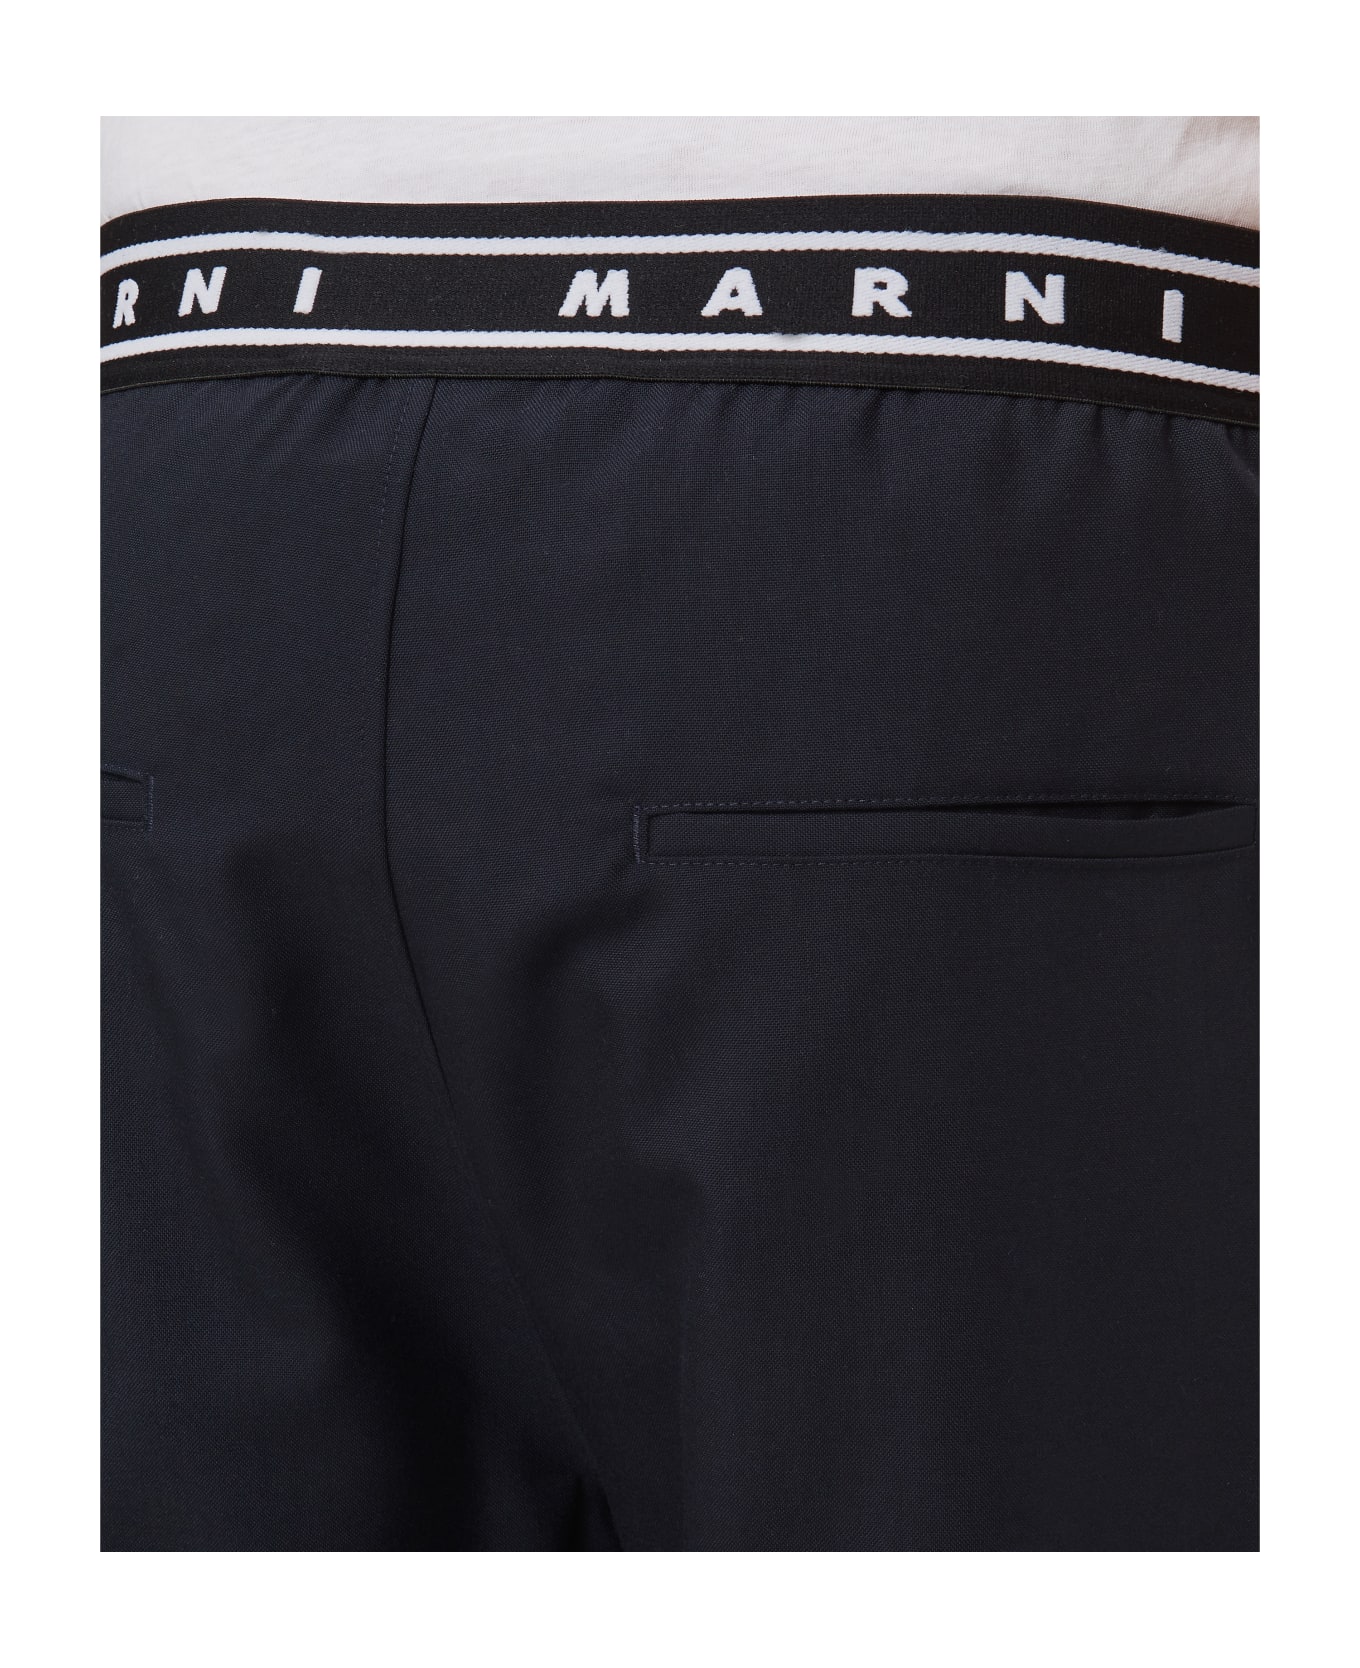 Marni Trousers With Marni Logo Waistband - Black シャツ